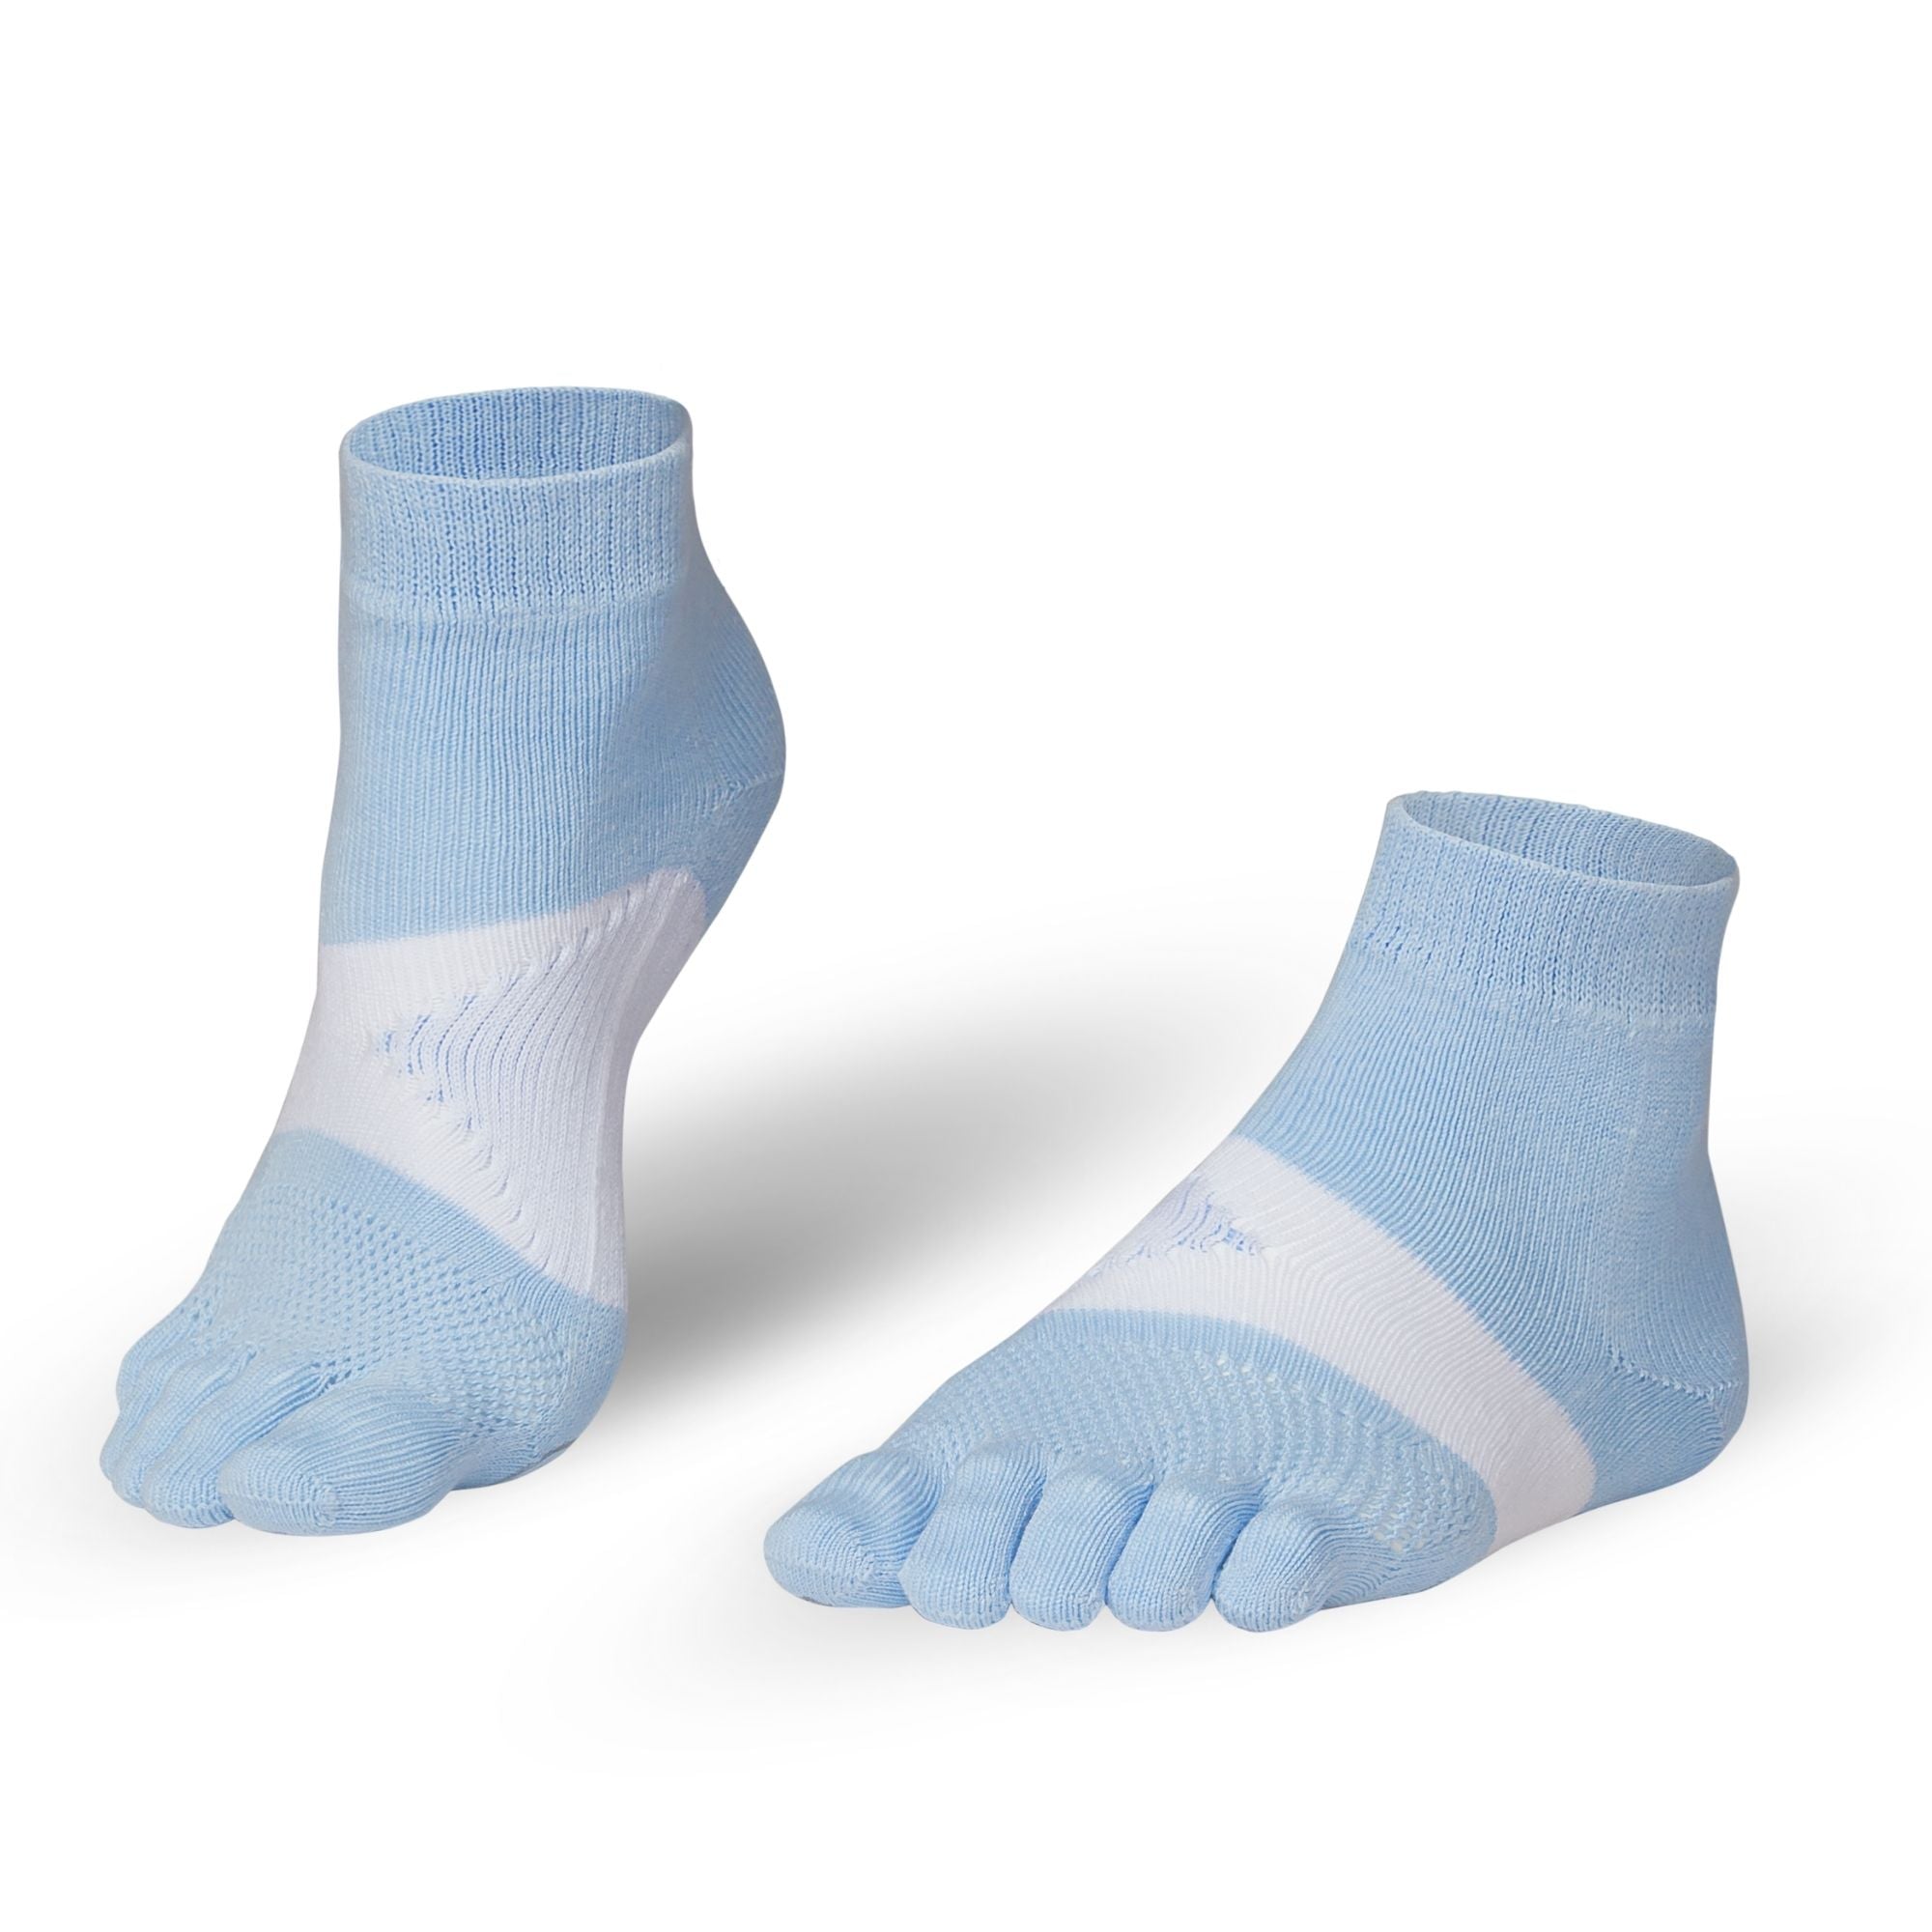 Knitido Marathon TS toe socks in blue white